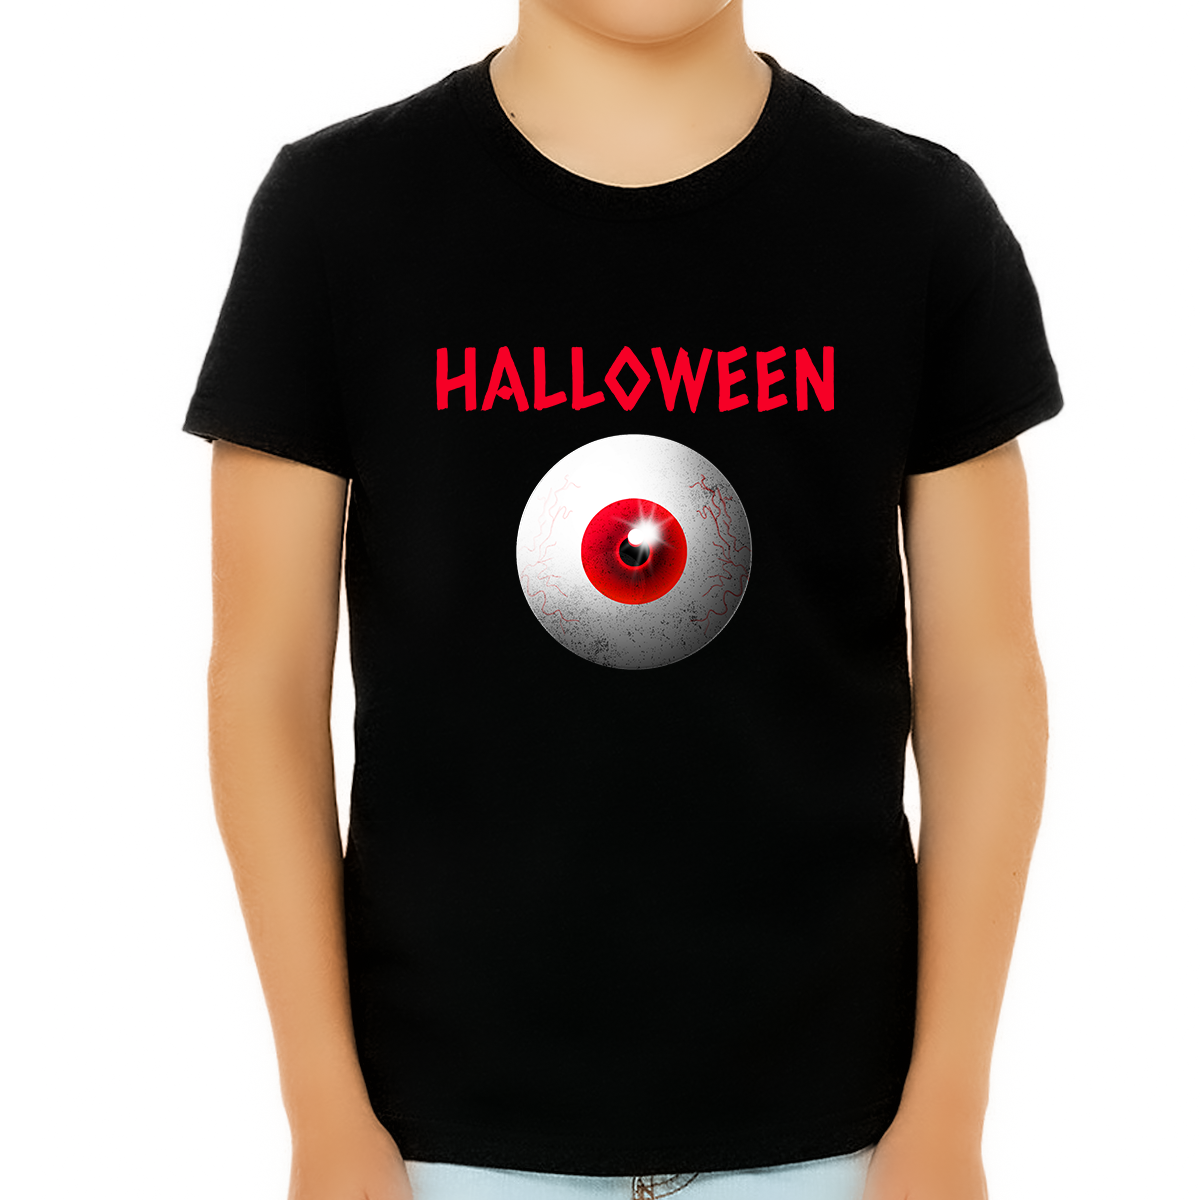 Eyeball Shirt Halloween Shirts for Kids Red Eye Shirt Boys Halloween Shirt Halloween Shirts for Kids